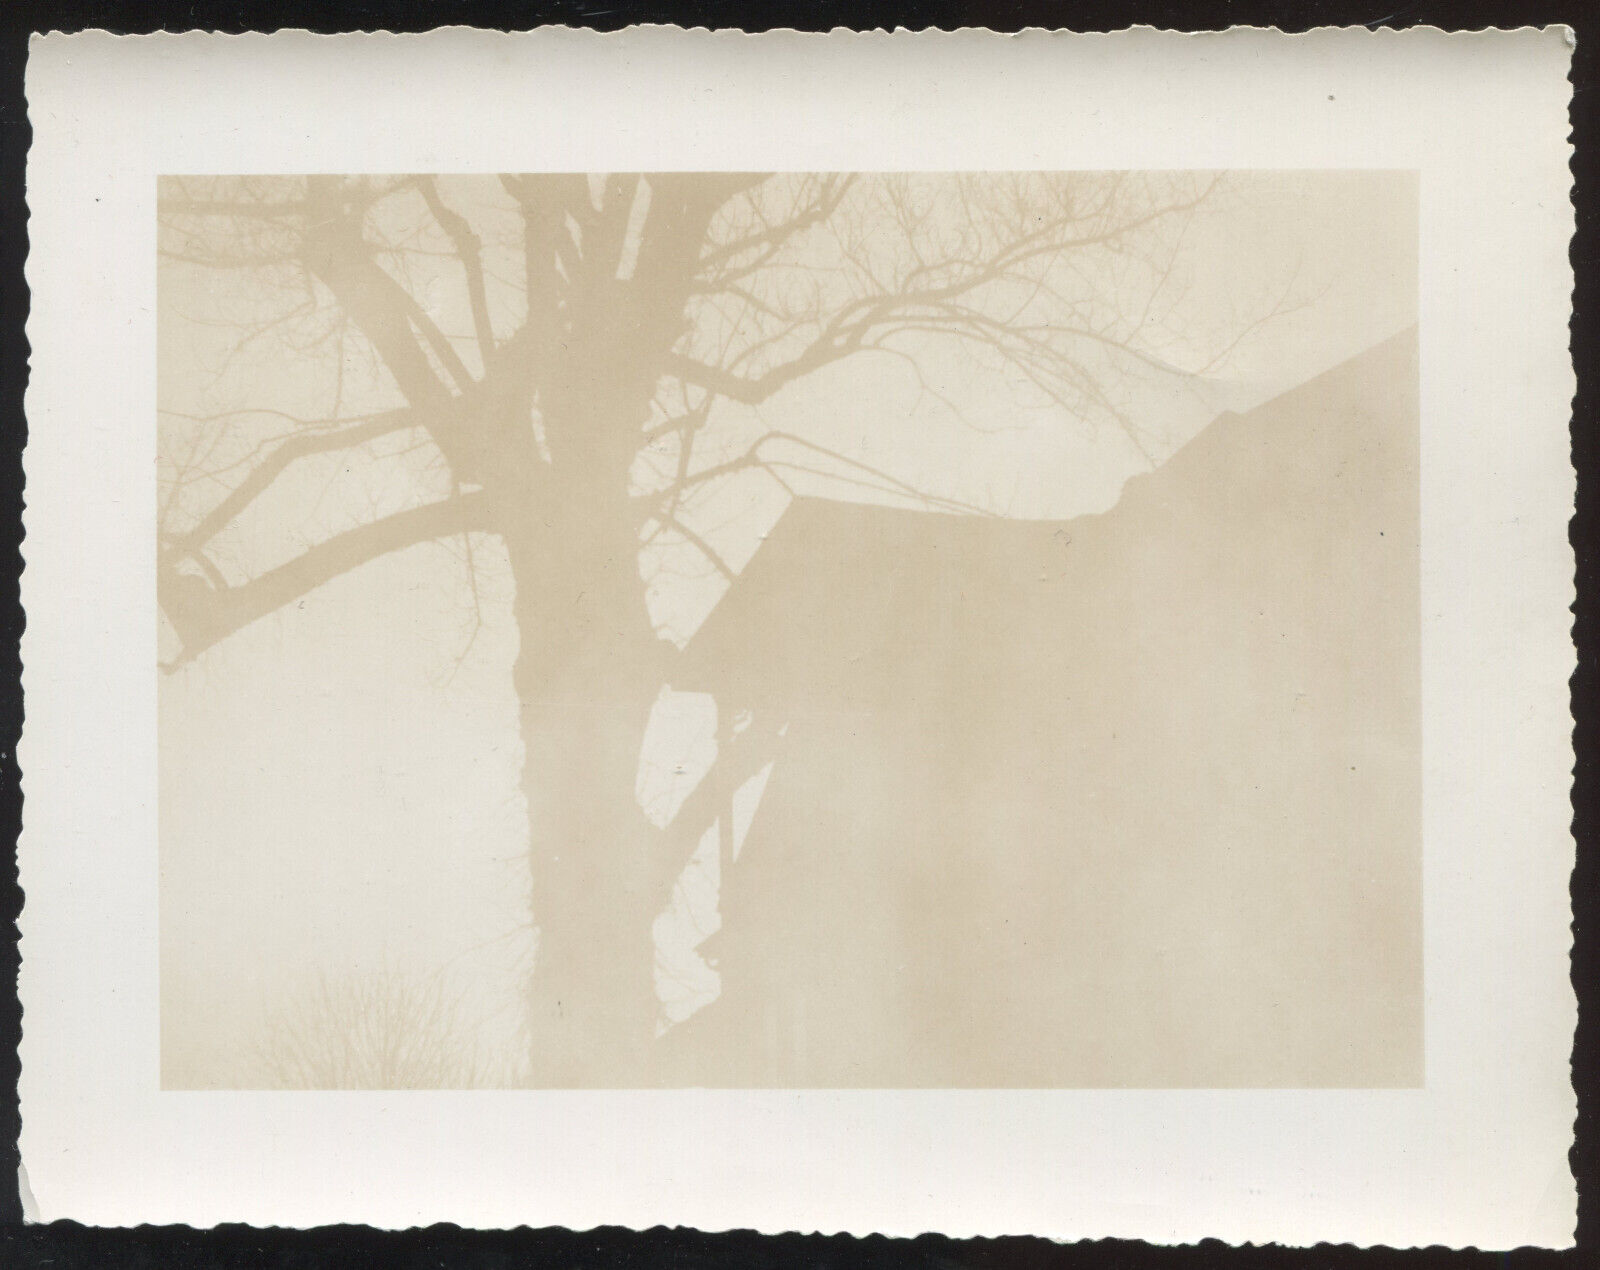 FOUND PHOTO Creepy Silhouette of House and Tree Odd Unusual Strange Snapshot VTG